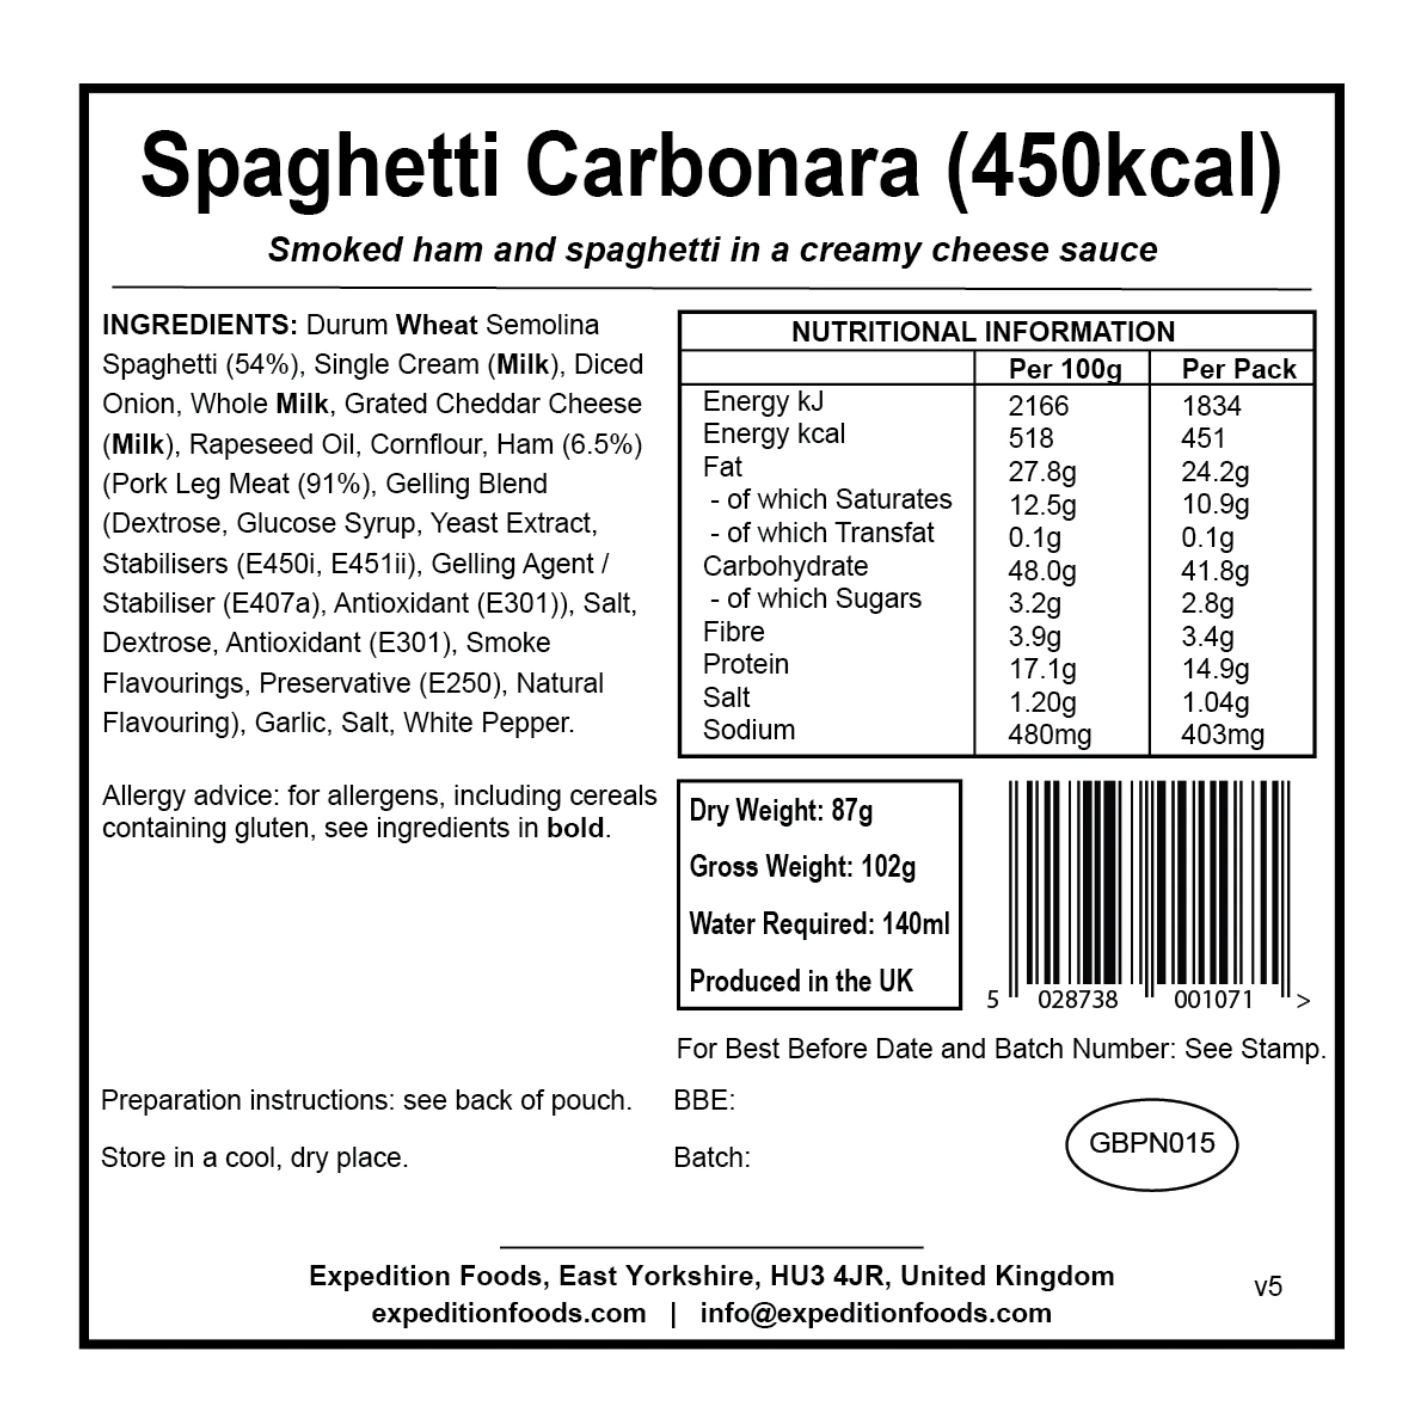 Expedition Foods Spaghetti Carbonara 450KCAL